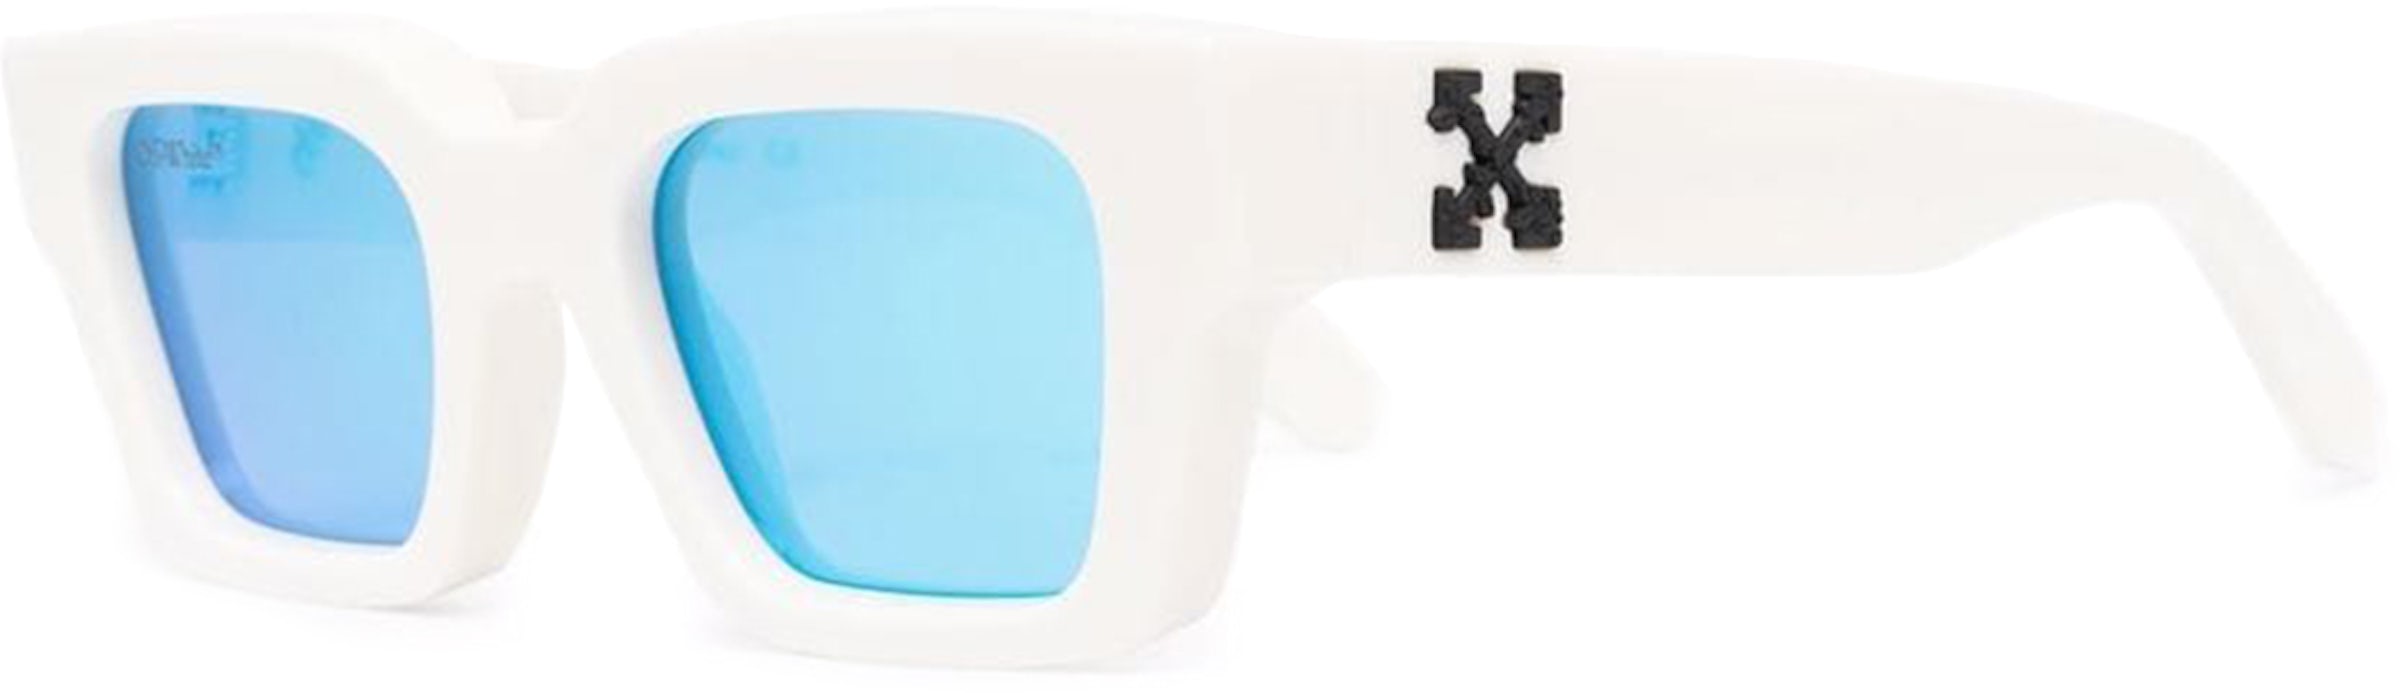 OFF-WHITE Virgil Square Frame Sunglasses Black/Black (OMRI012R21PLA0011010)  Men's - US